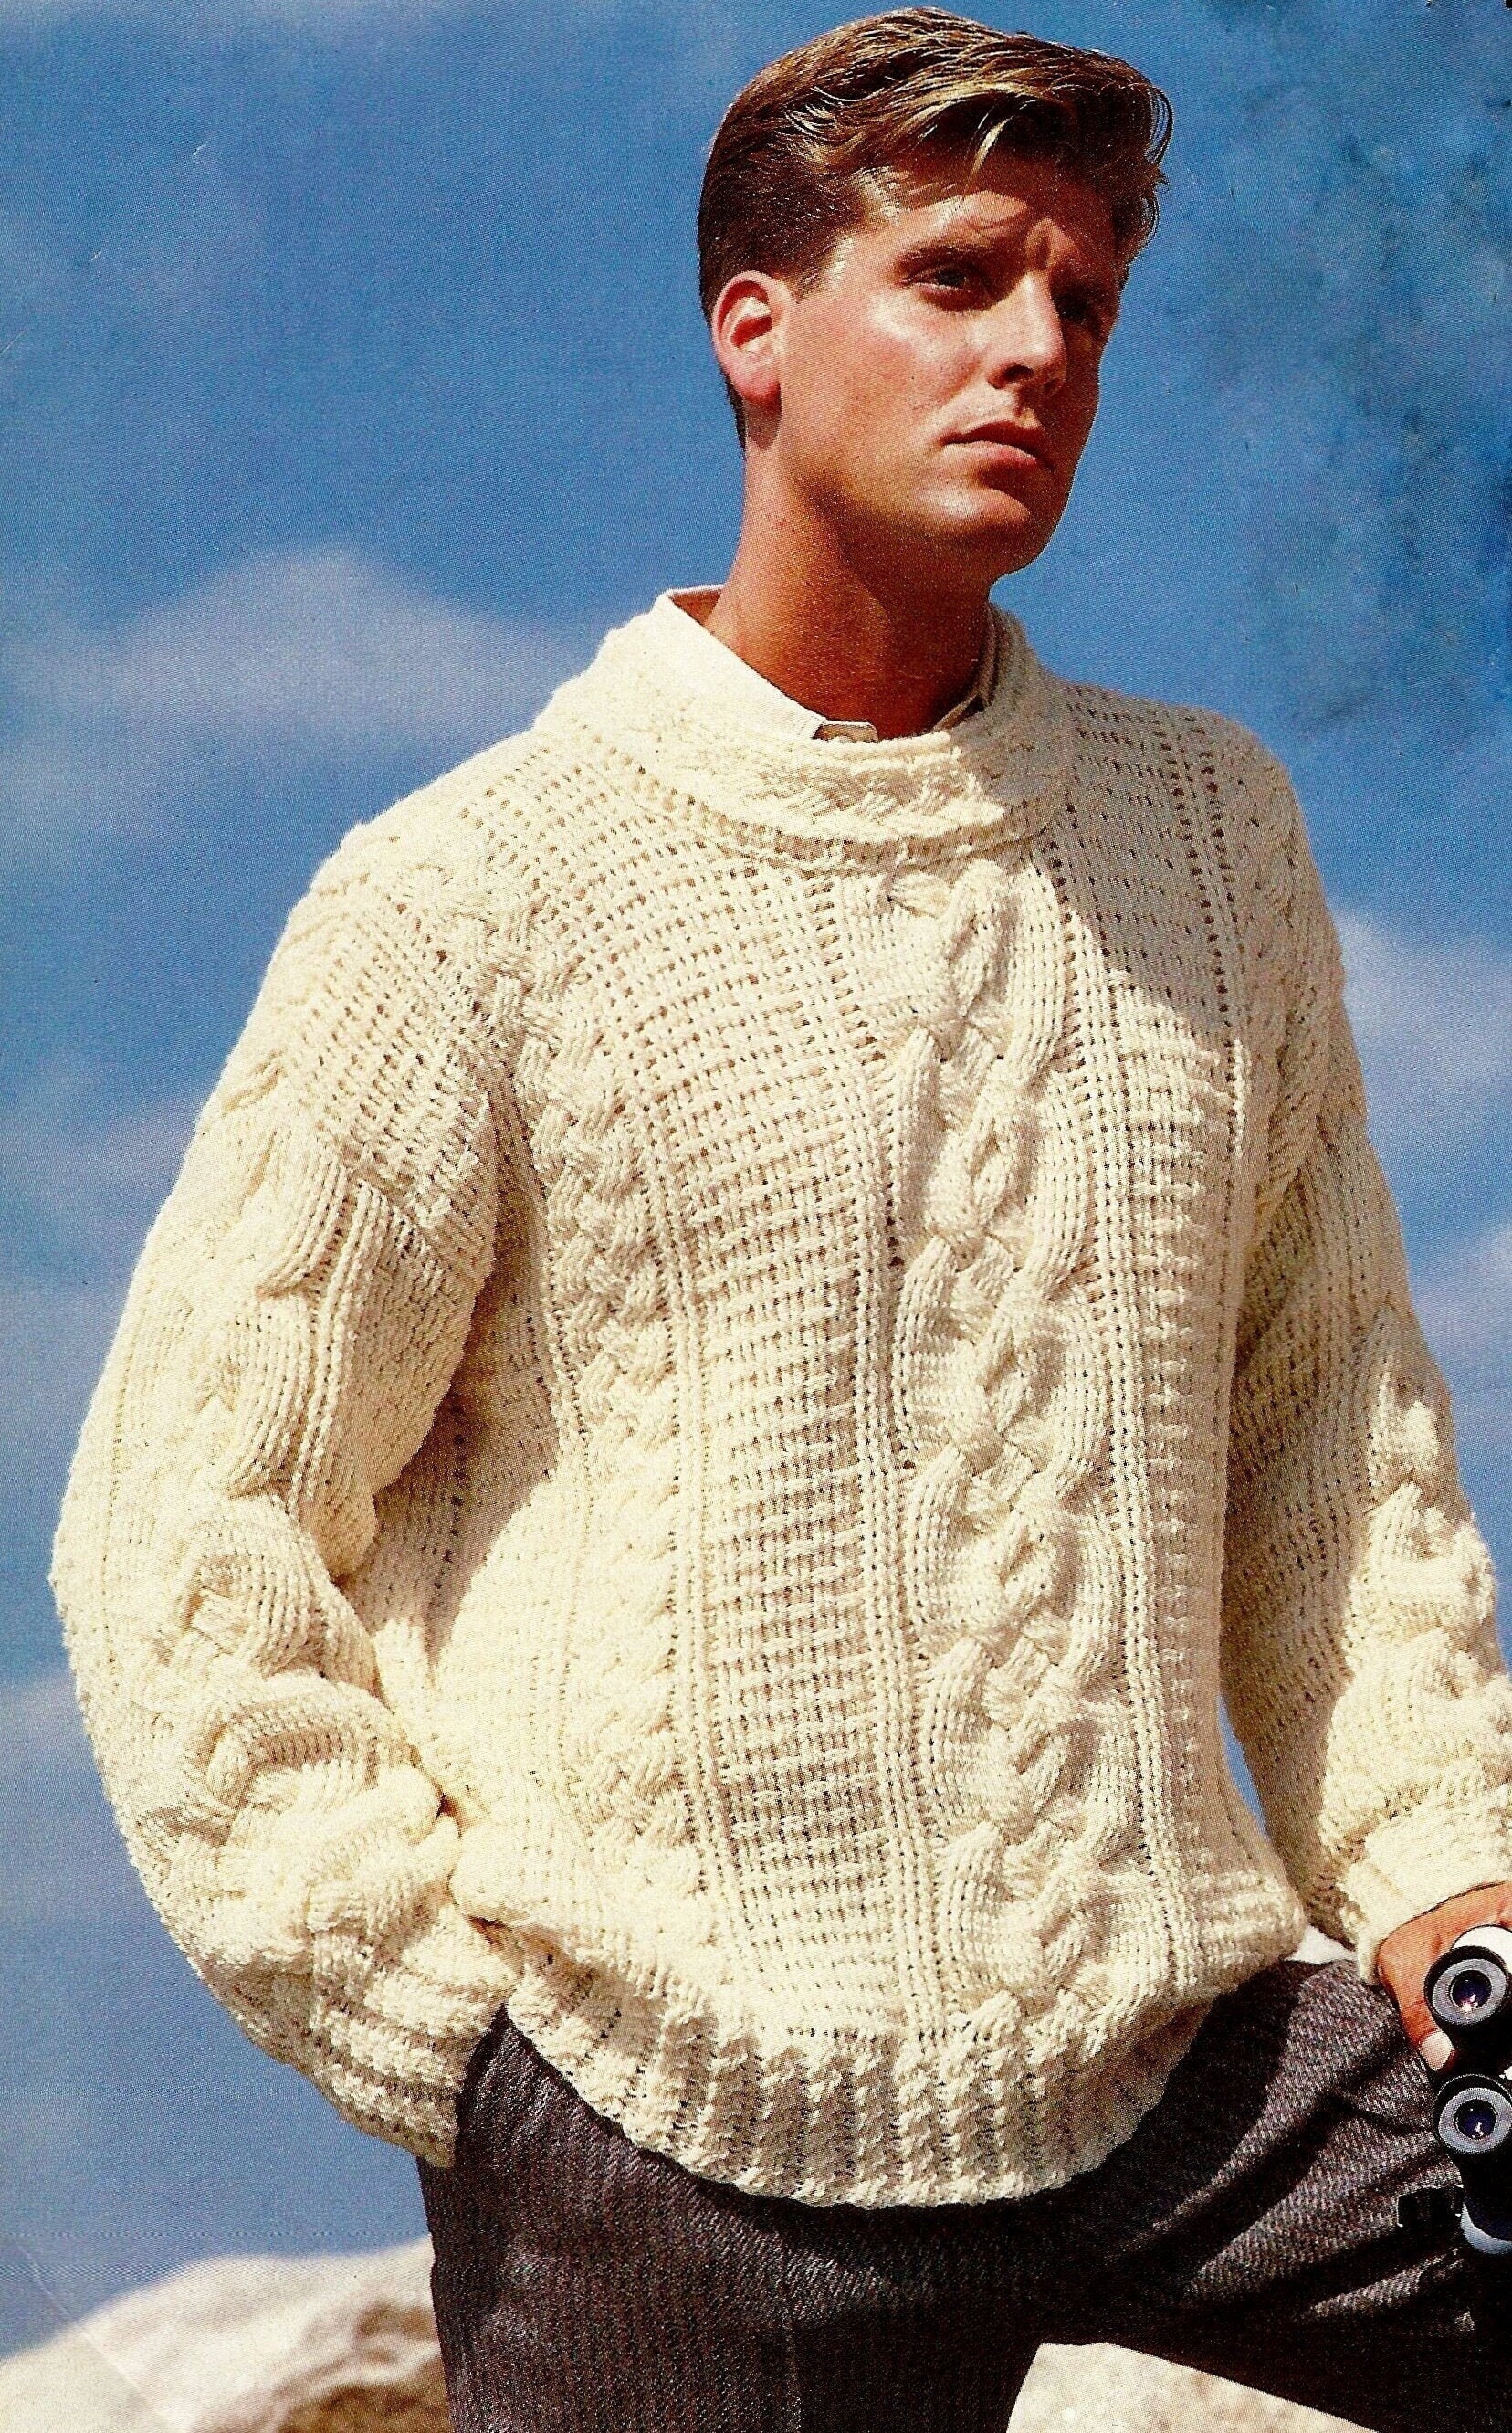 Buy Crocheted Men's Fisherman Cable Sweater Pattern Digital